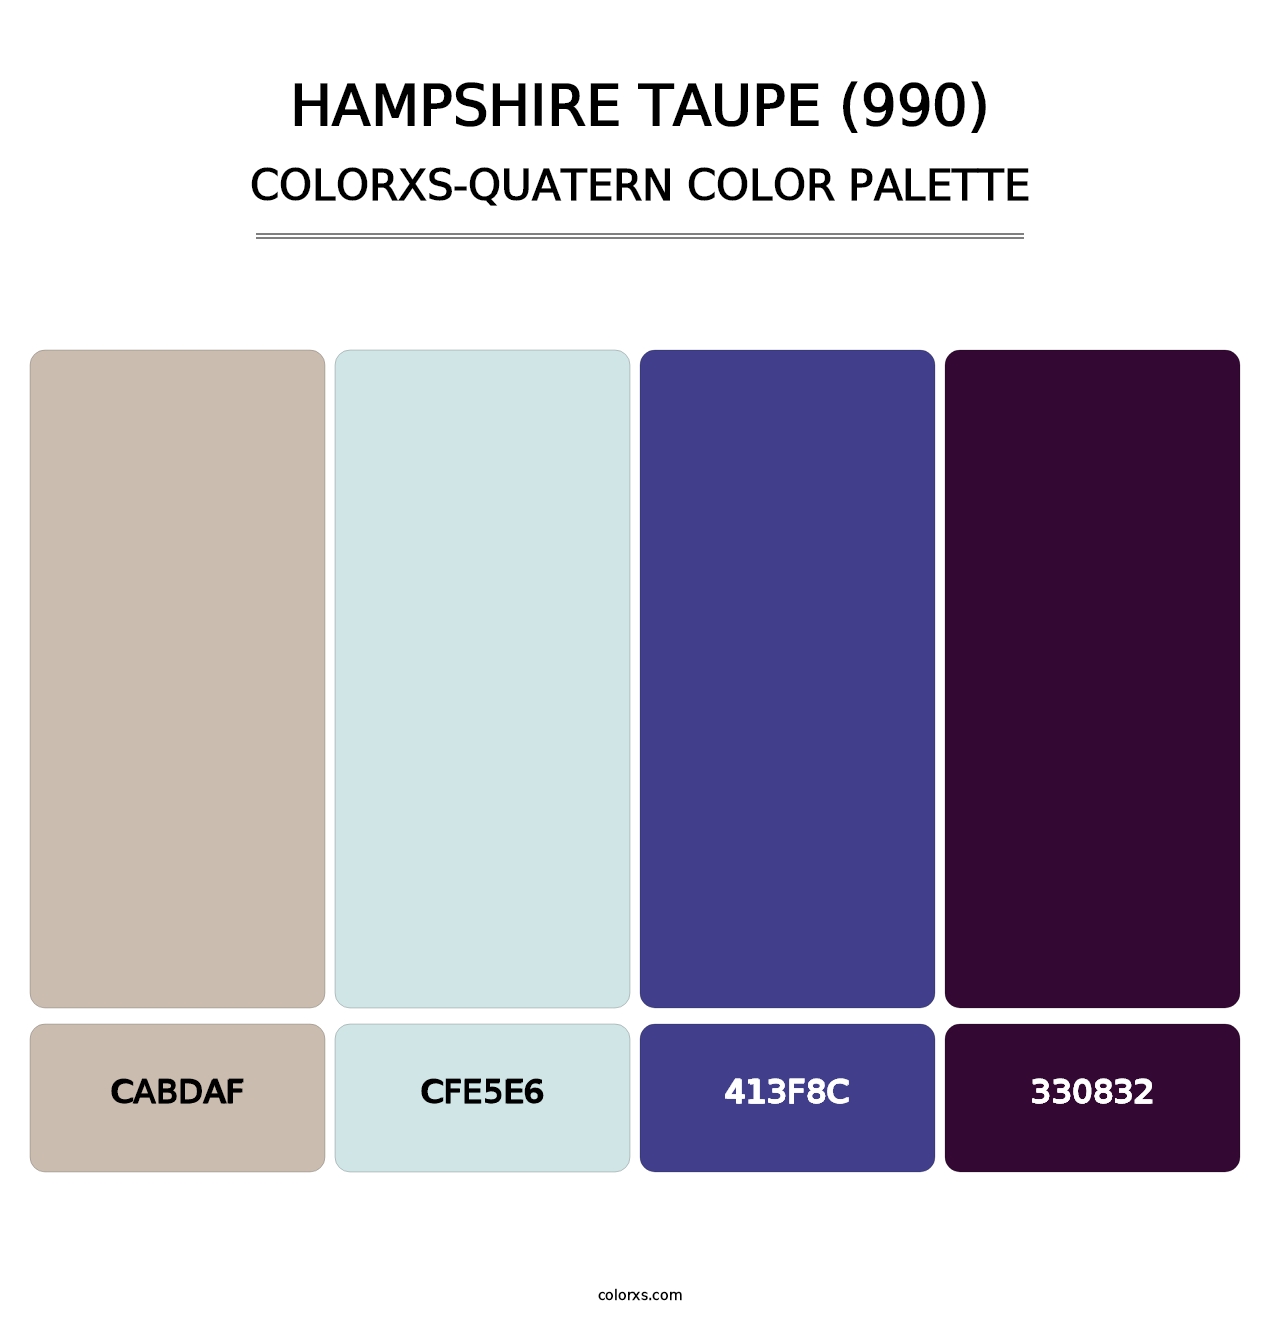 Hampshire Taupe (990) - Colorxs Quatern Palette